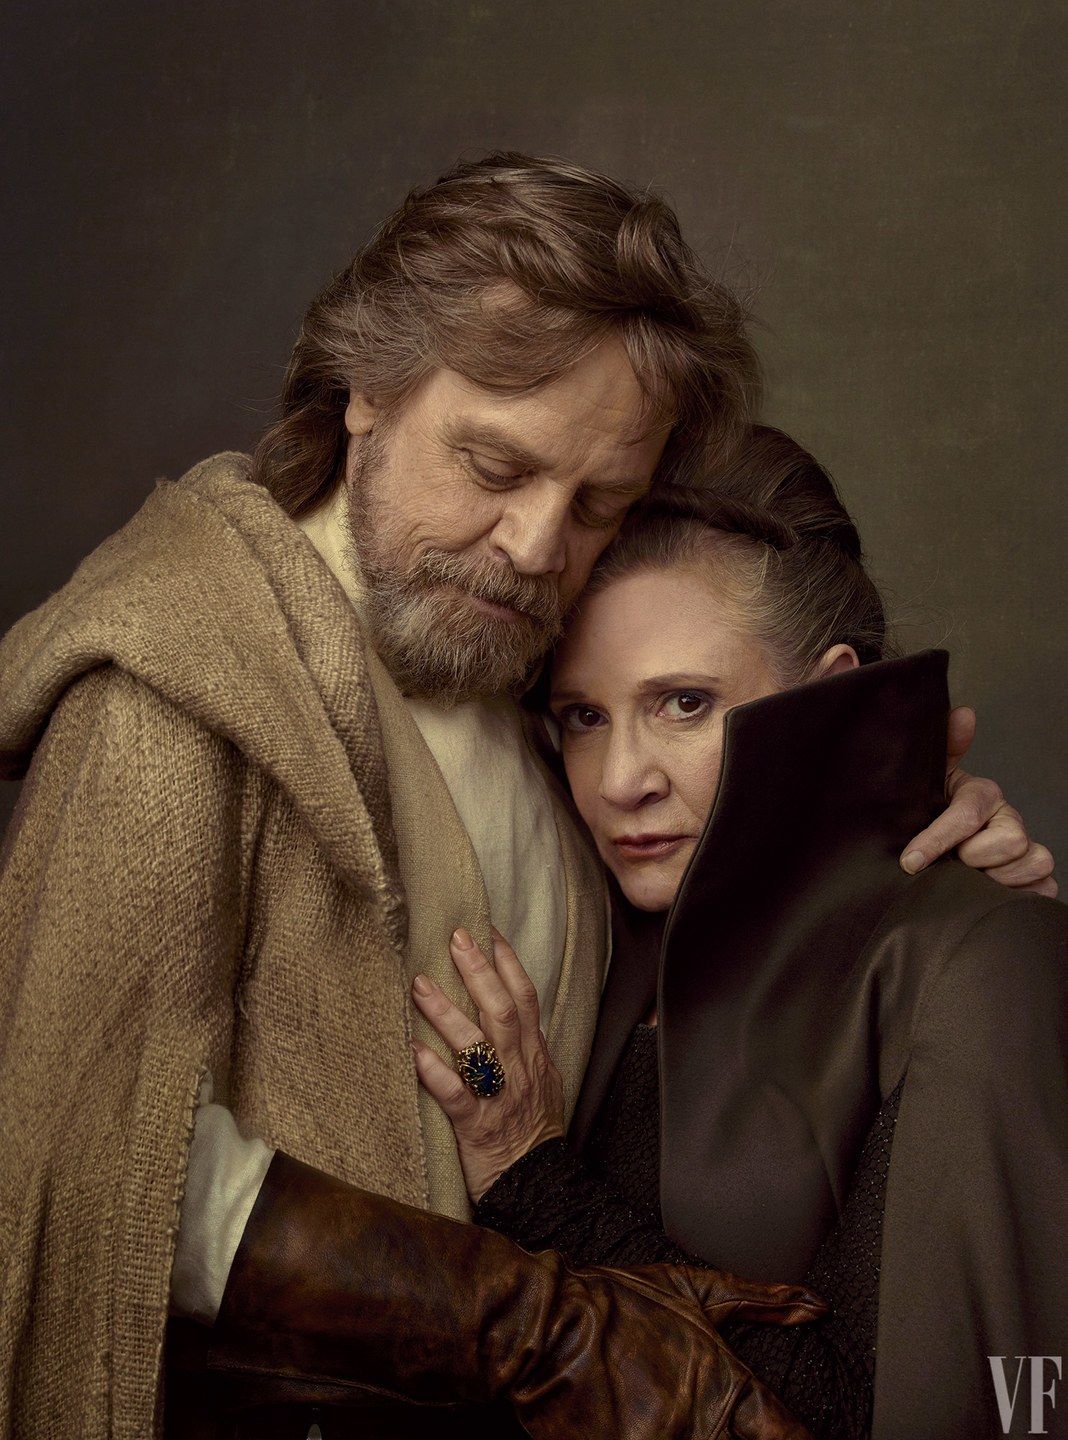 Luke and Leia Star Wars 8 photo